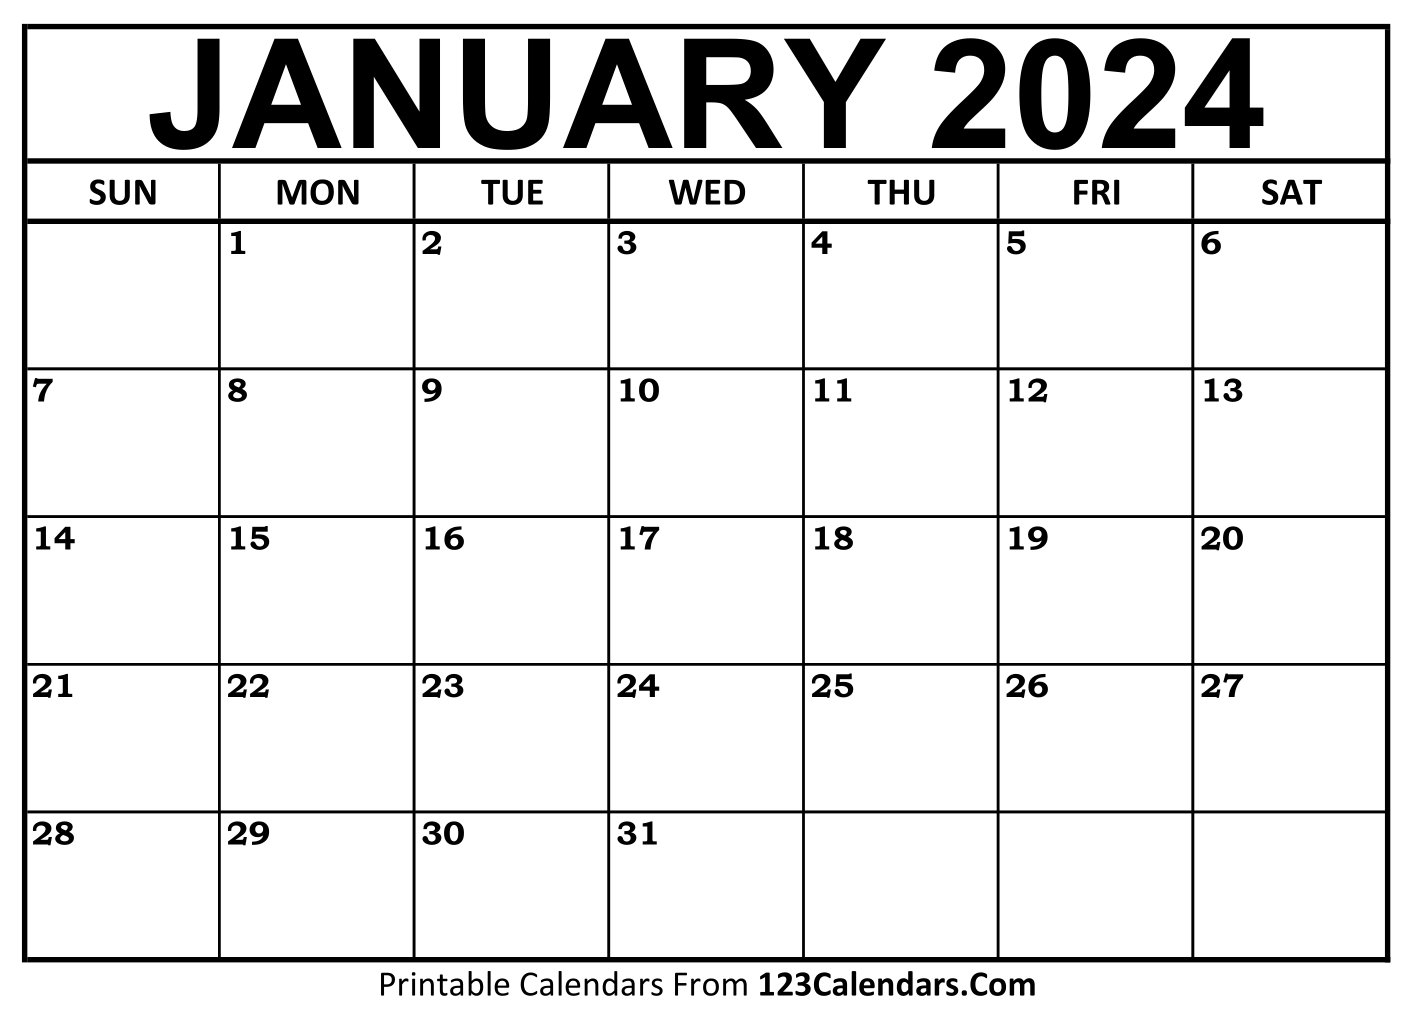 Printable January 2024 Calendar Templates - 123Calendars for Free Printable Calendar Jan 2024